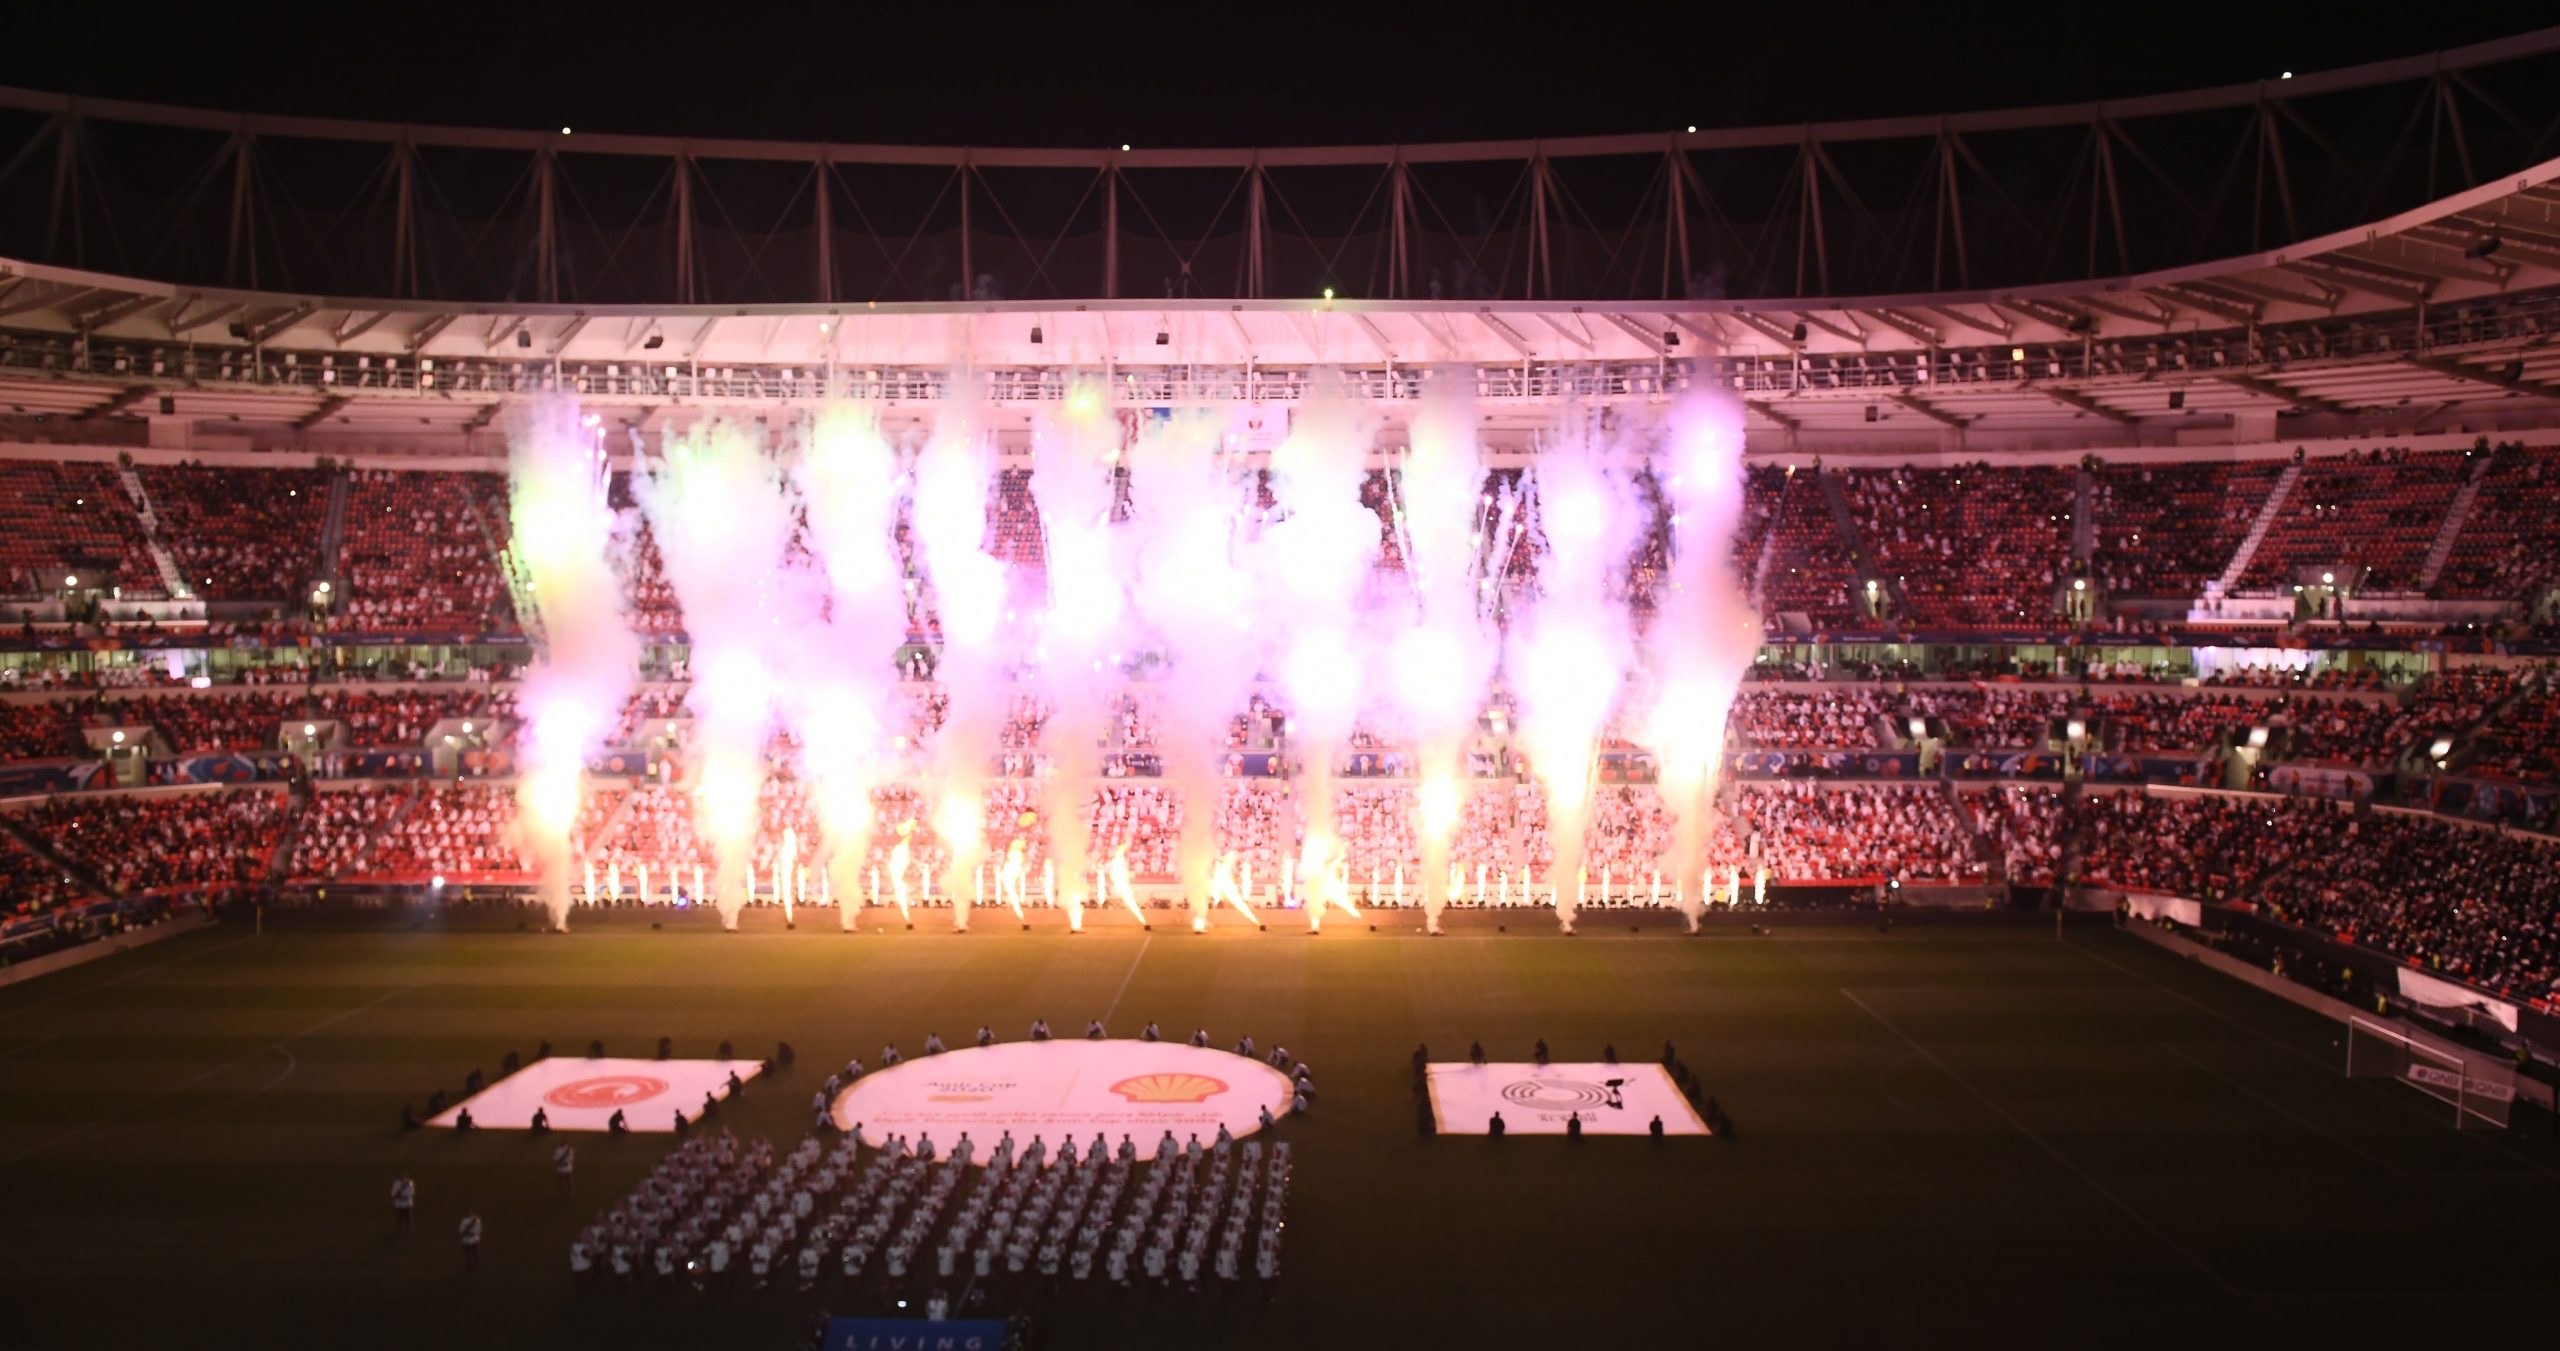 Qatar Inaugurates Fourth World Cup Stadium Amidst Celebrations